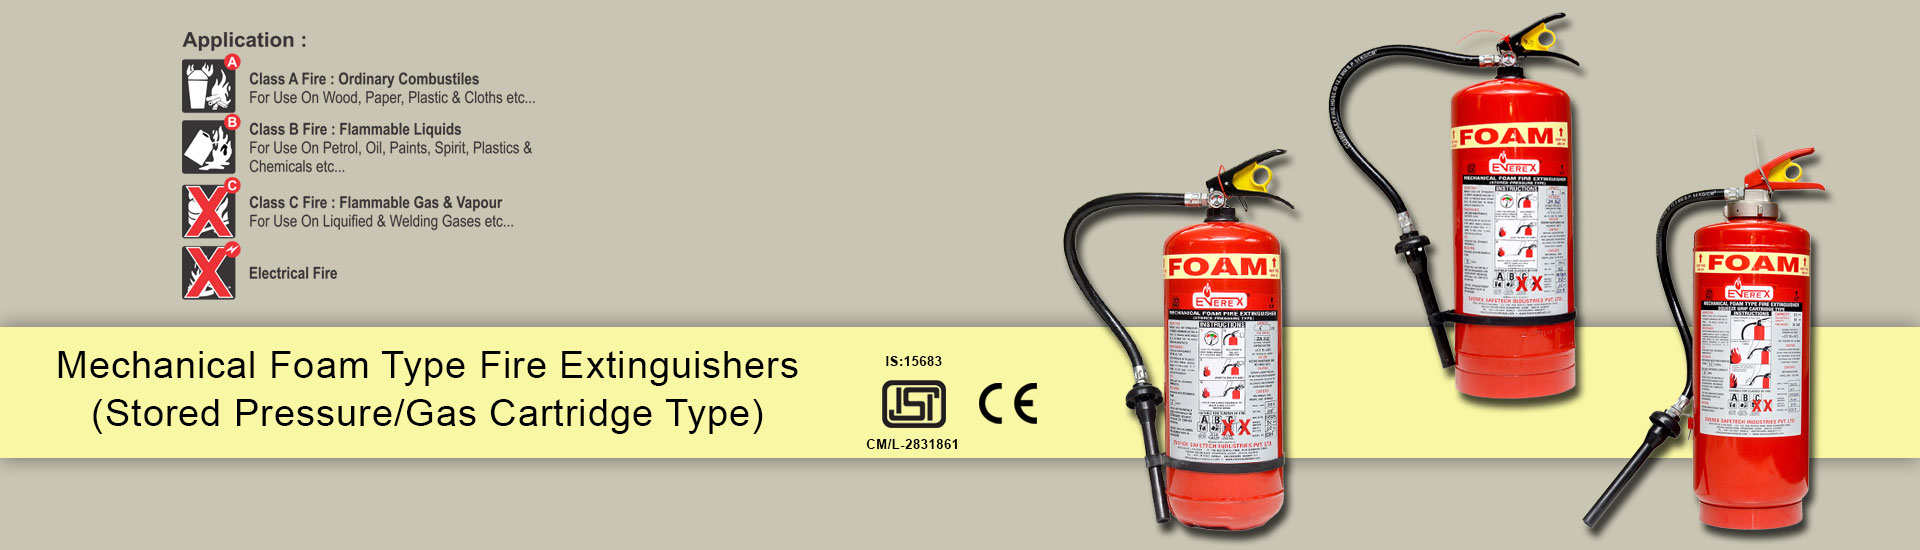 Mechanical foam type fire extinguishers